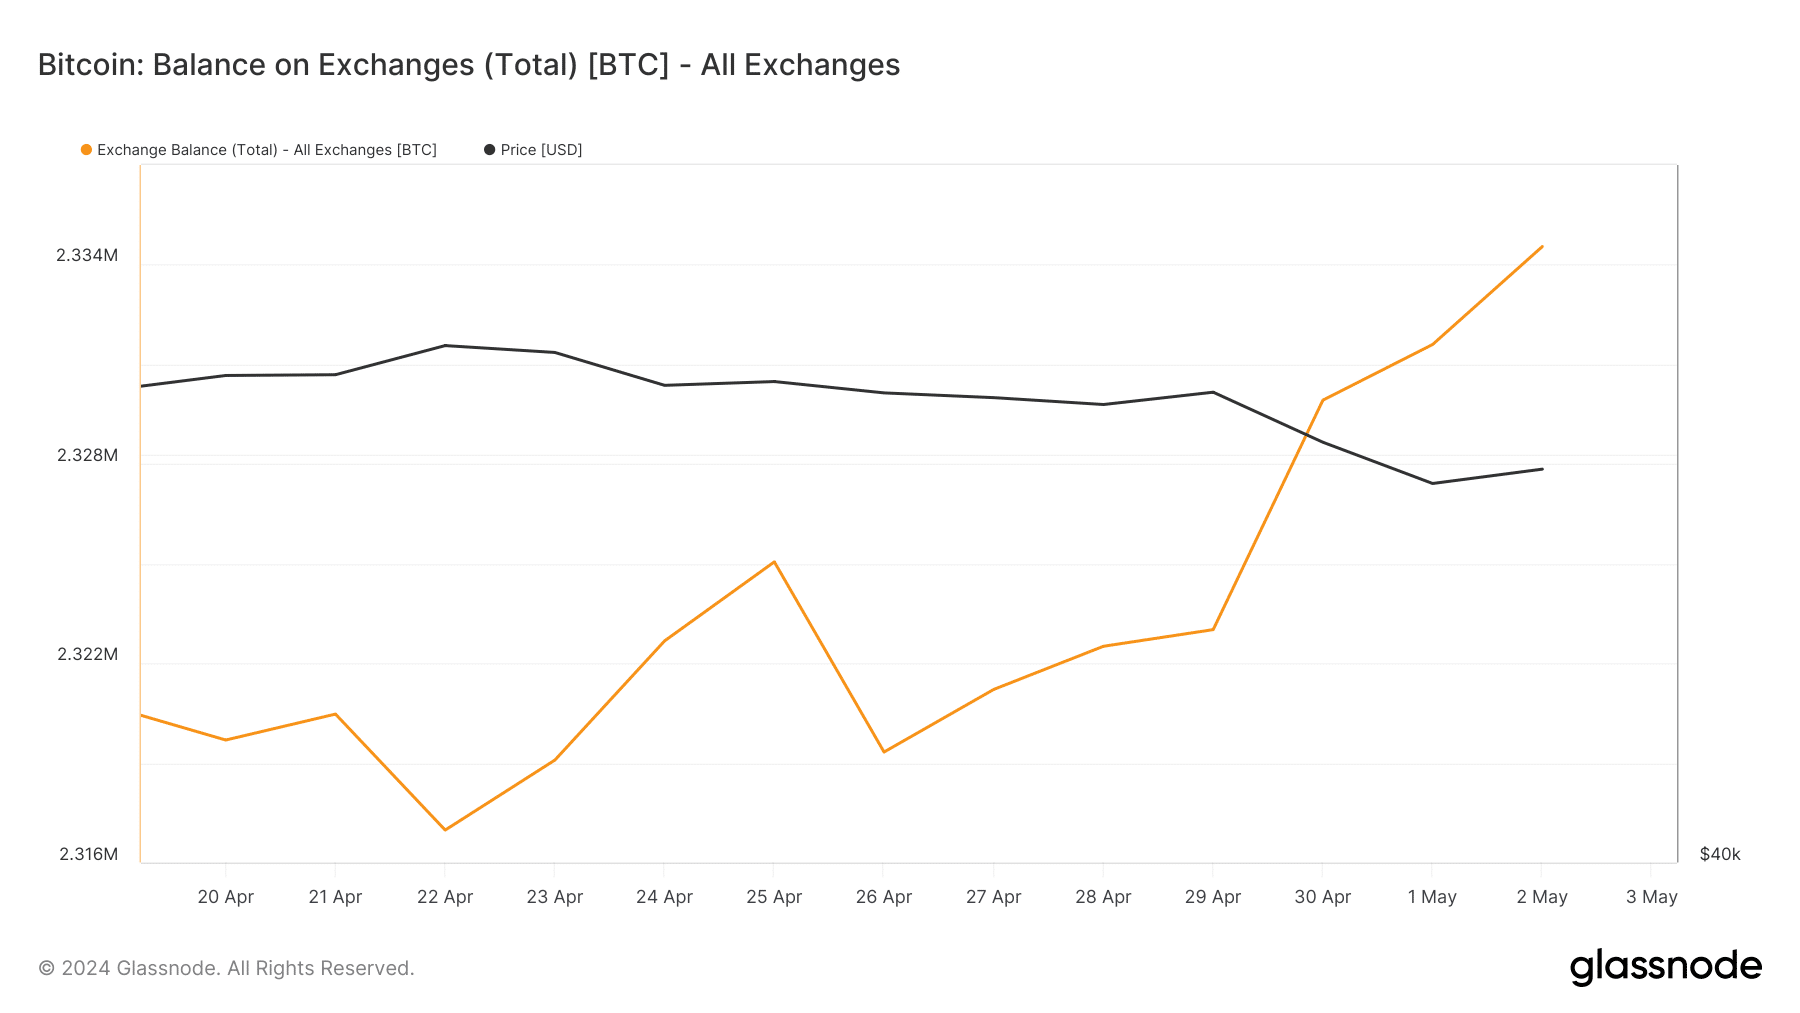 BTC's balance on exchanges increased